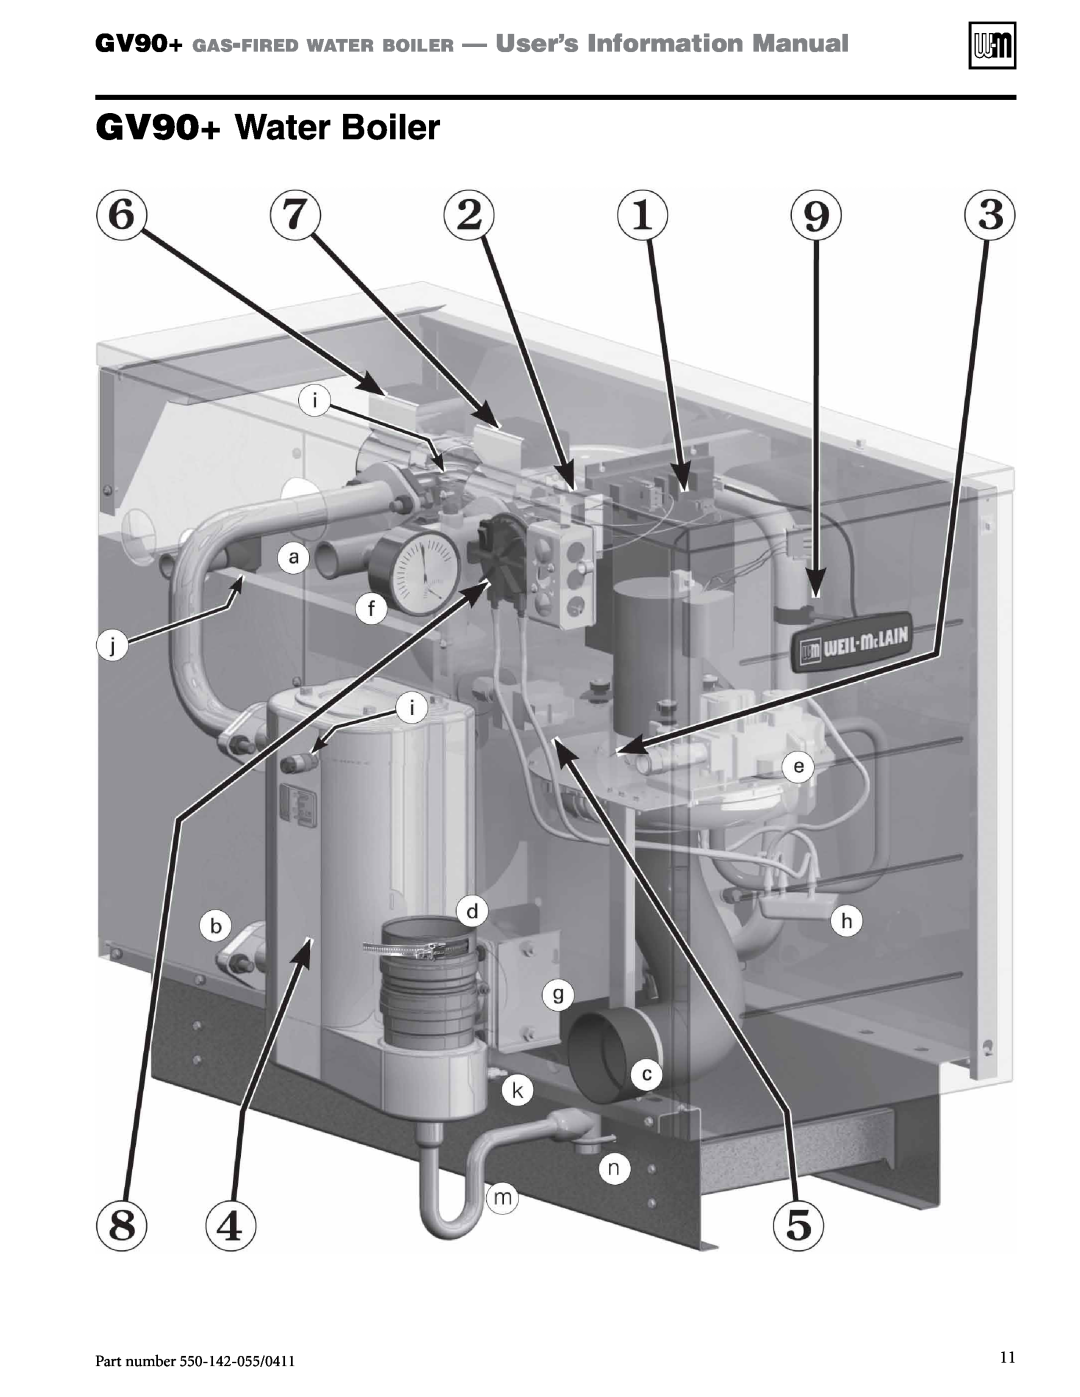 Weil-McLain manual GV90+ Water Boiler, Part number 550-142-055/0411 